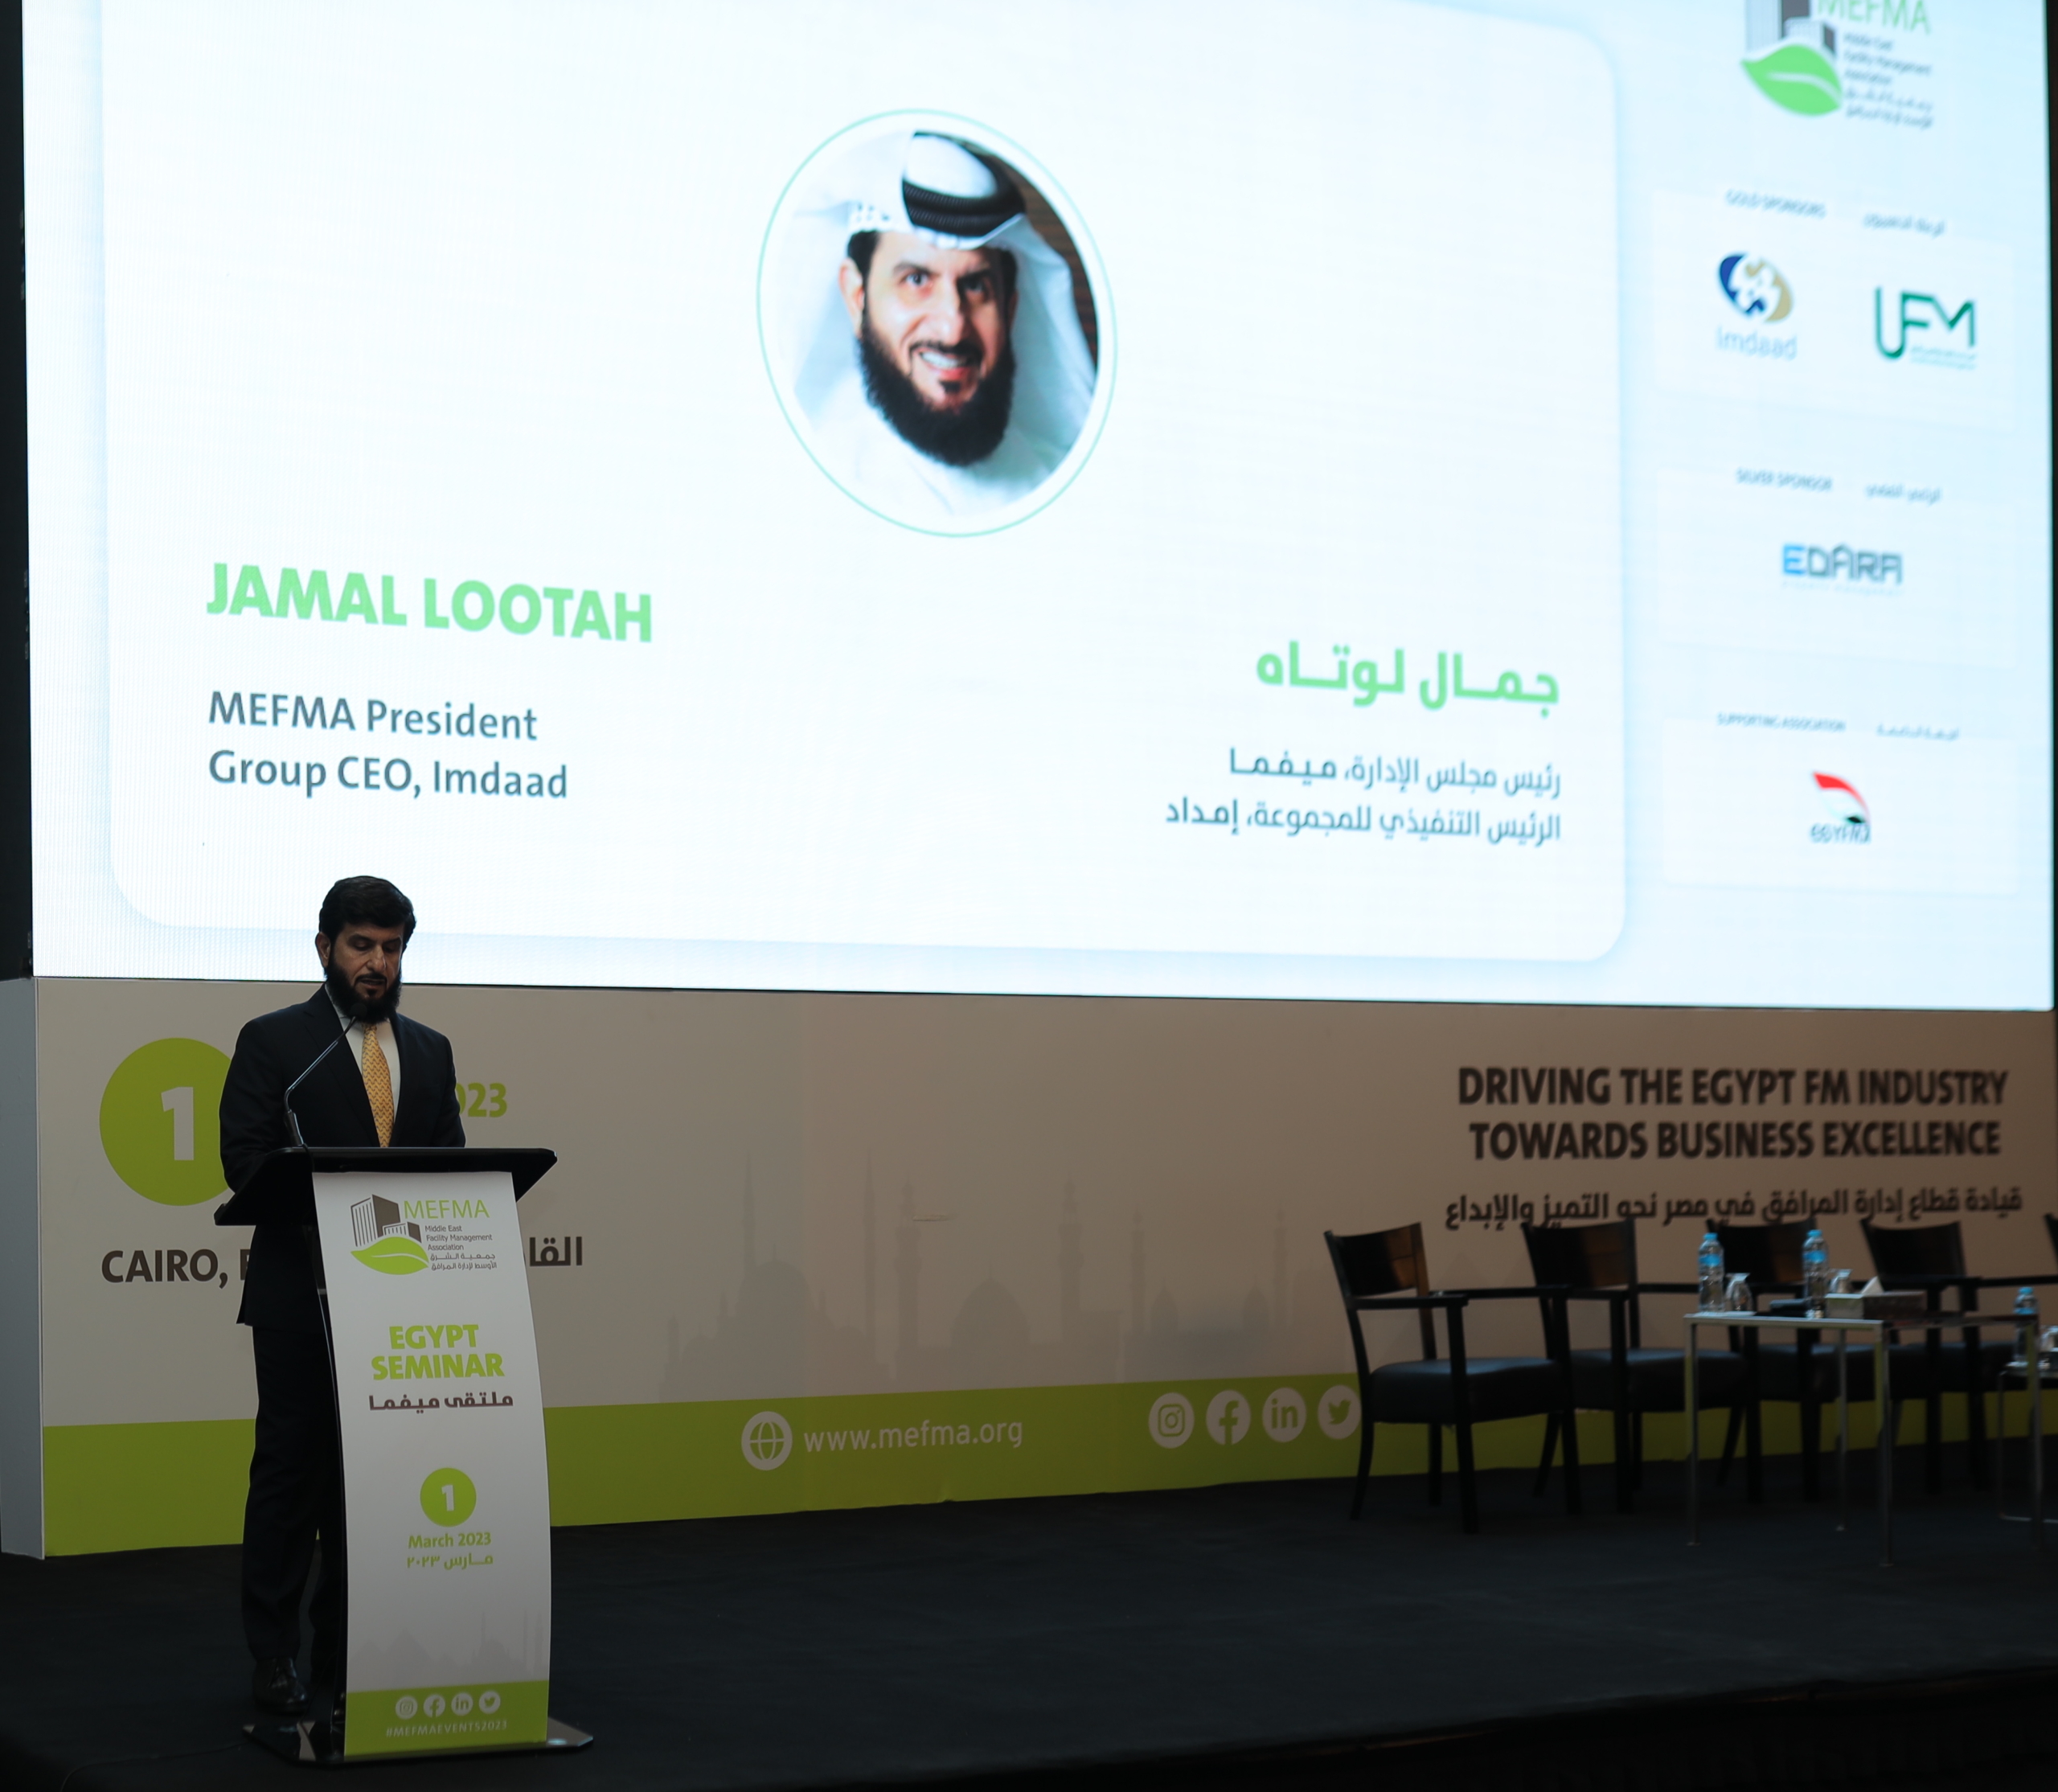 Jamal Lootah, Co-founder and President of MEFMA